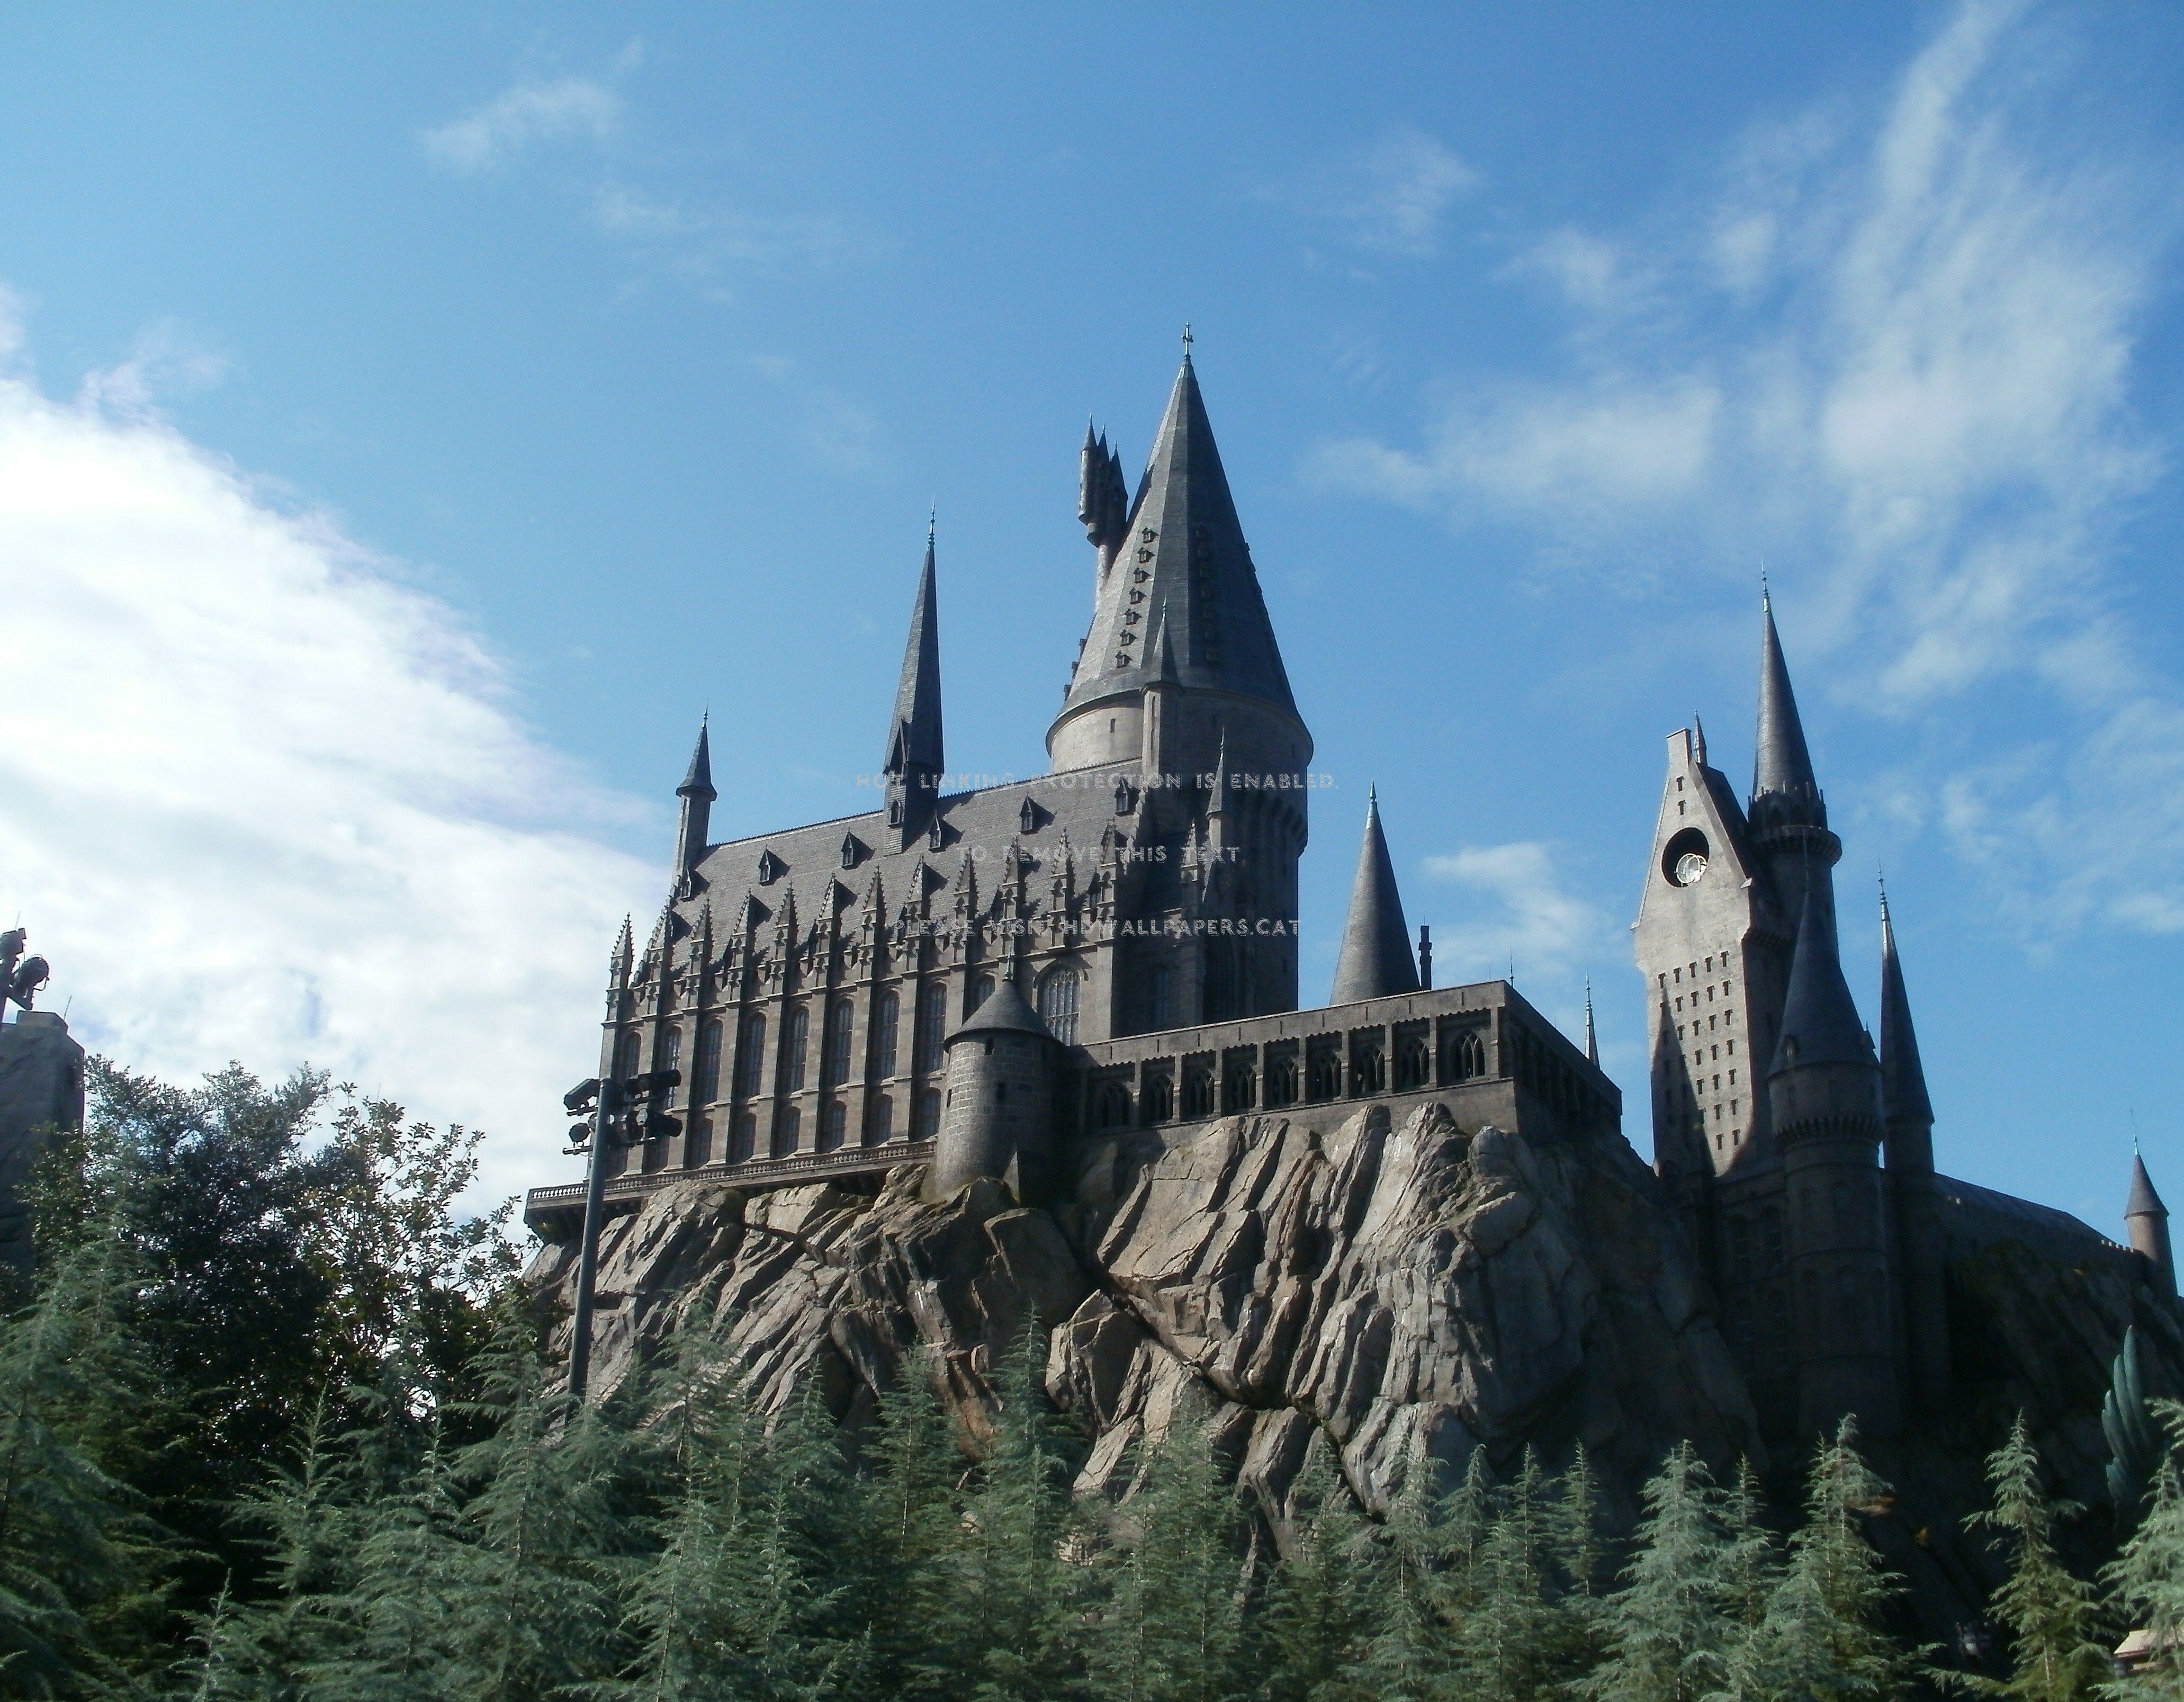 Hogwarts Castle Backdrop Wallpapers